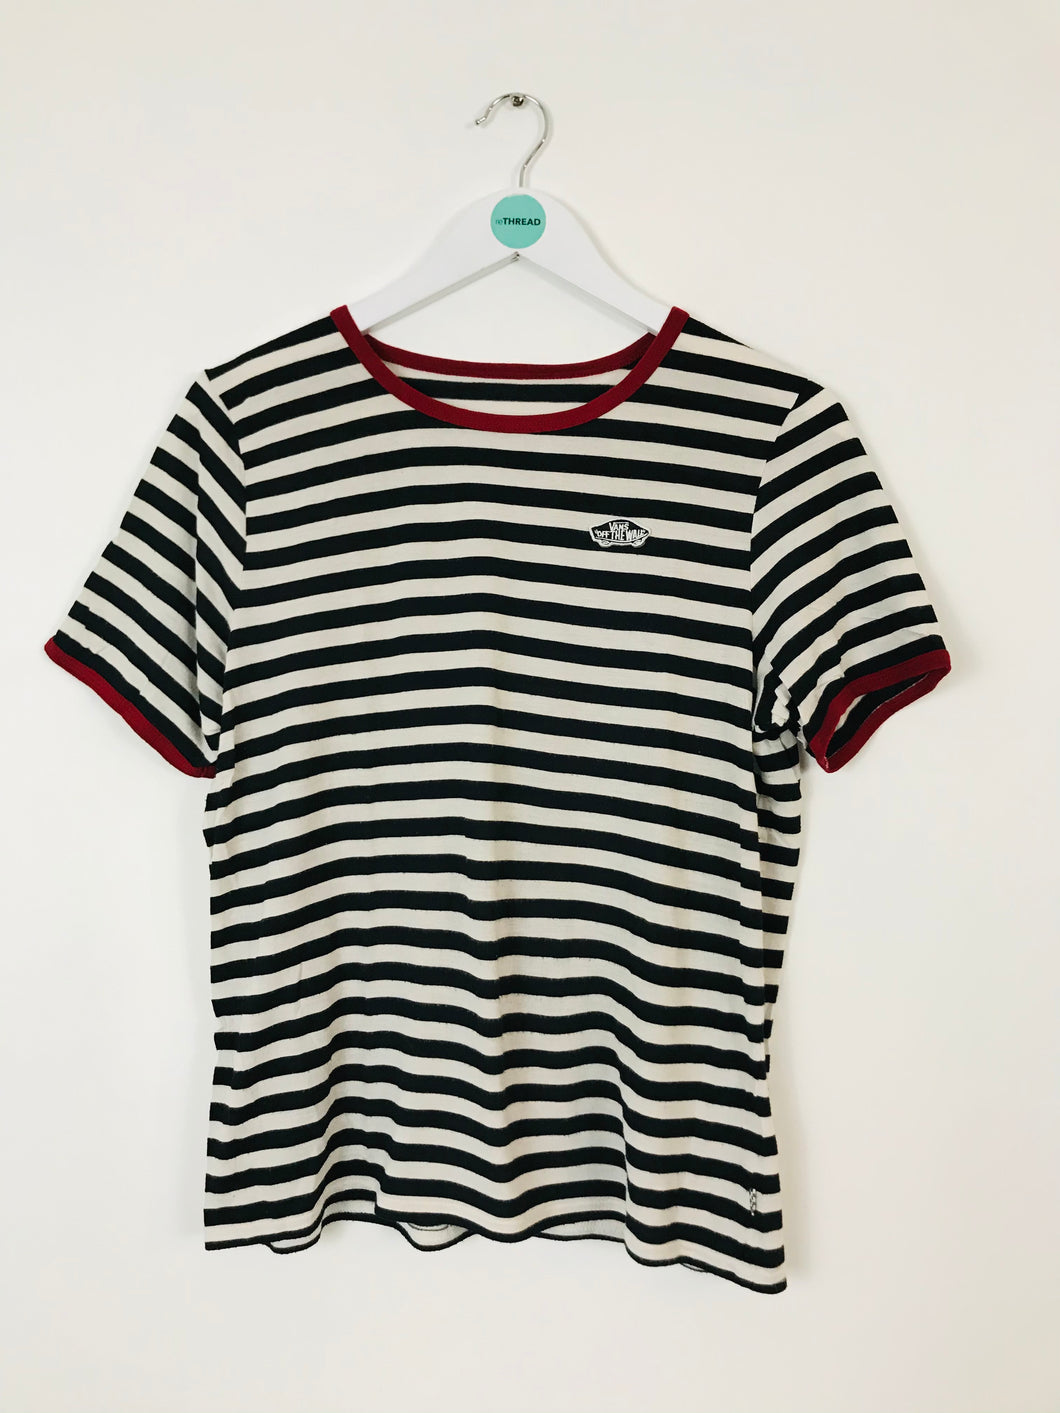 Vans Womens Stripe Tshirt | UK14 | Black and white